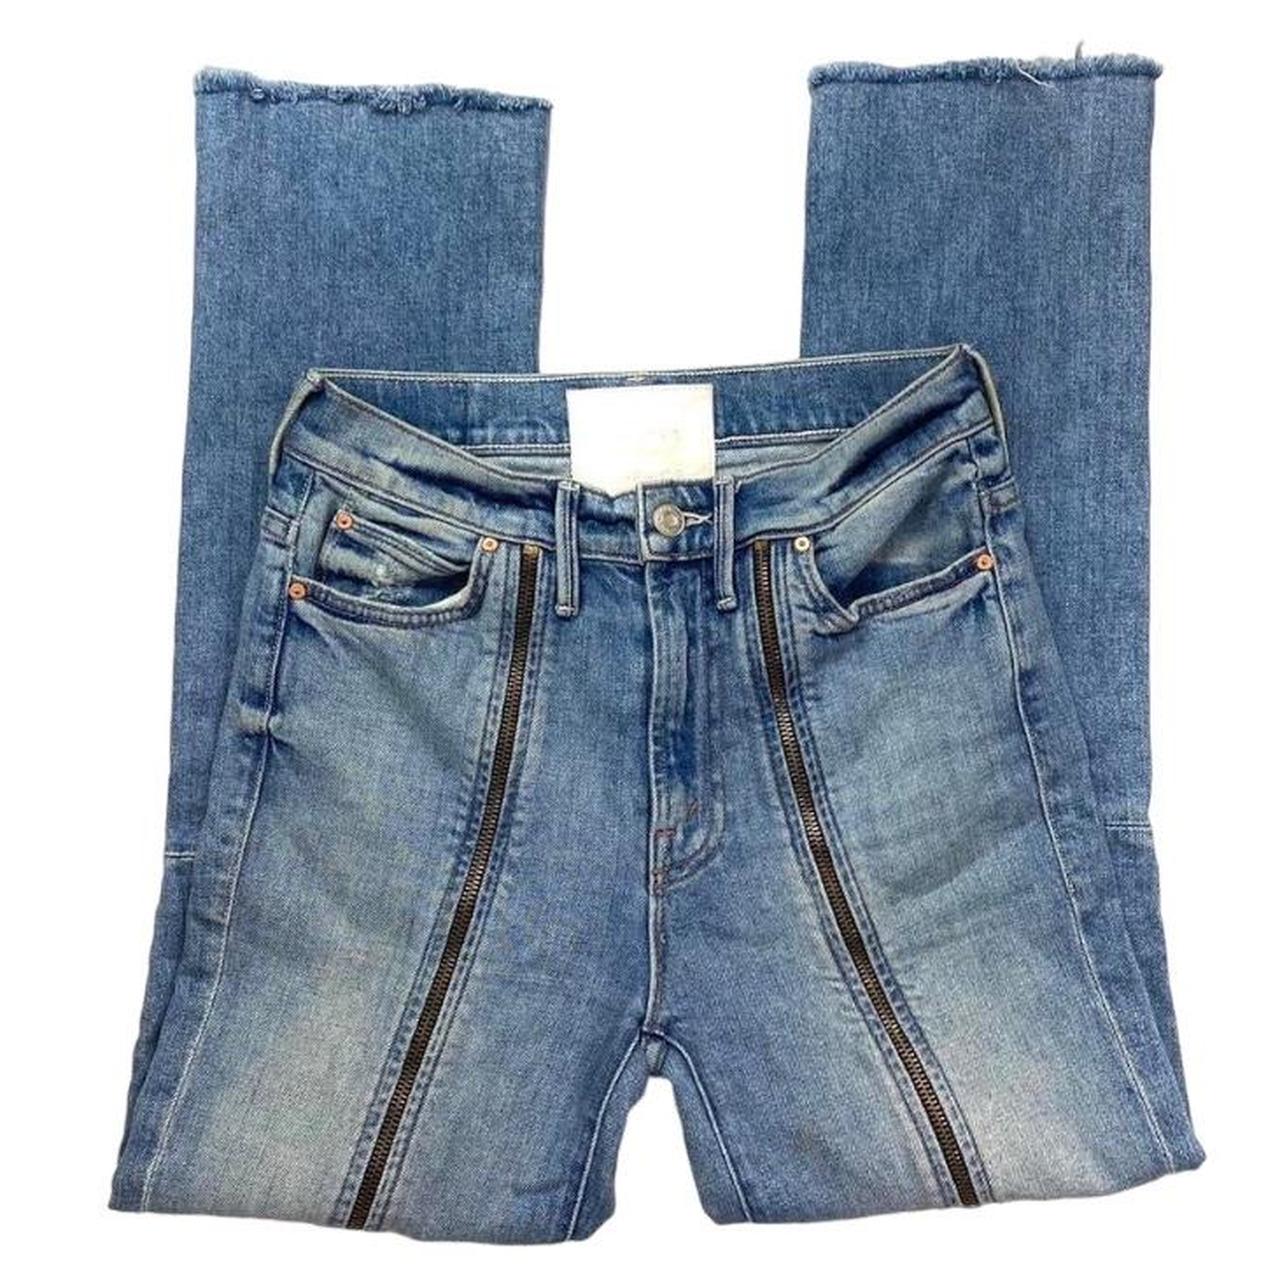 Mother Denim Zipper Jeans 💫 Size 25 Fit like a... - Depop